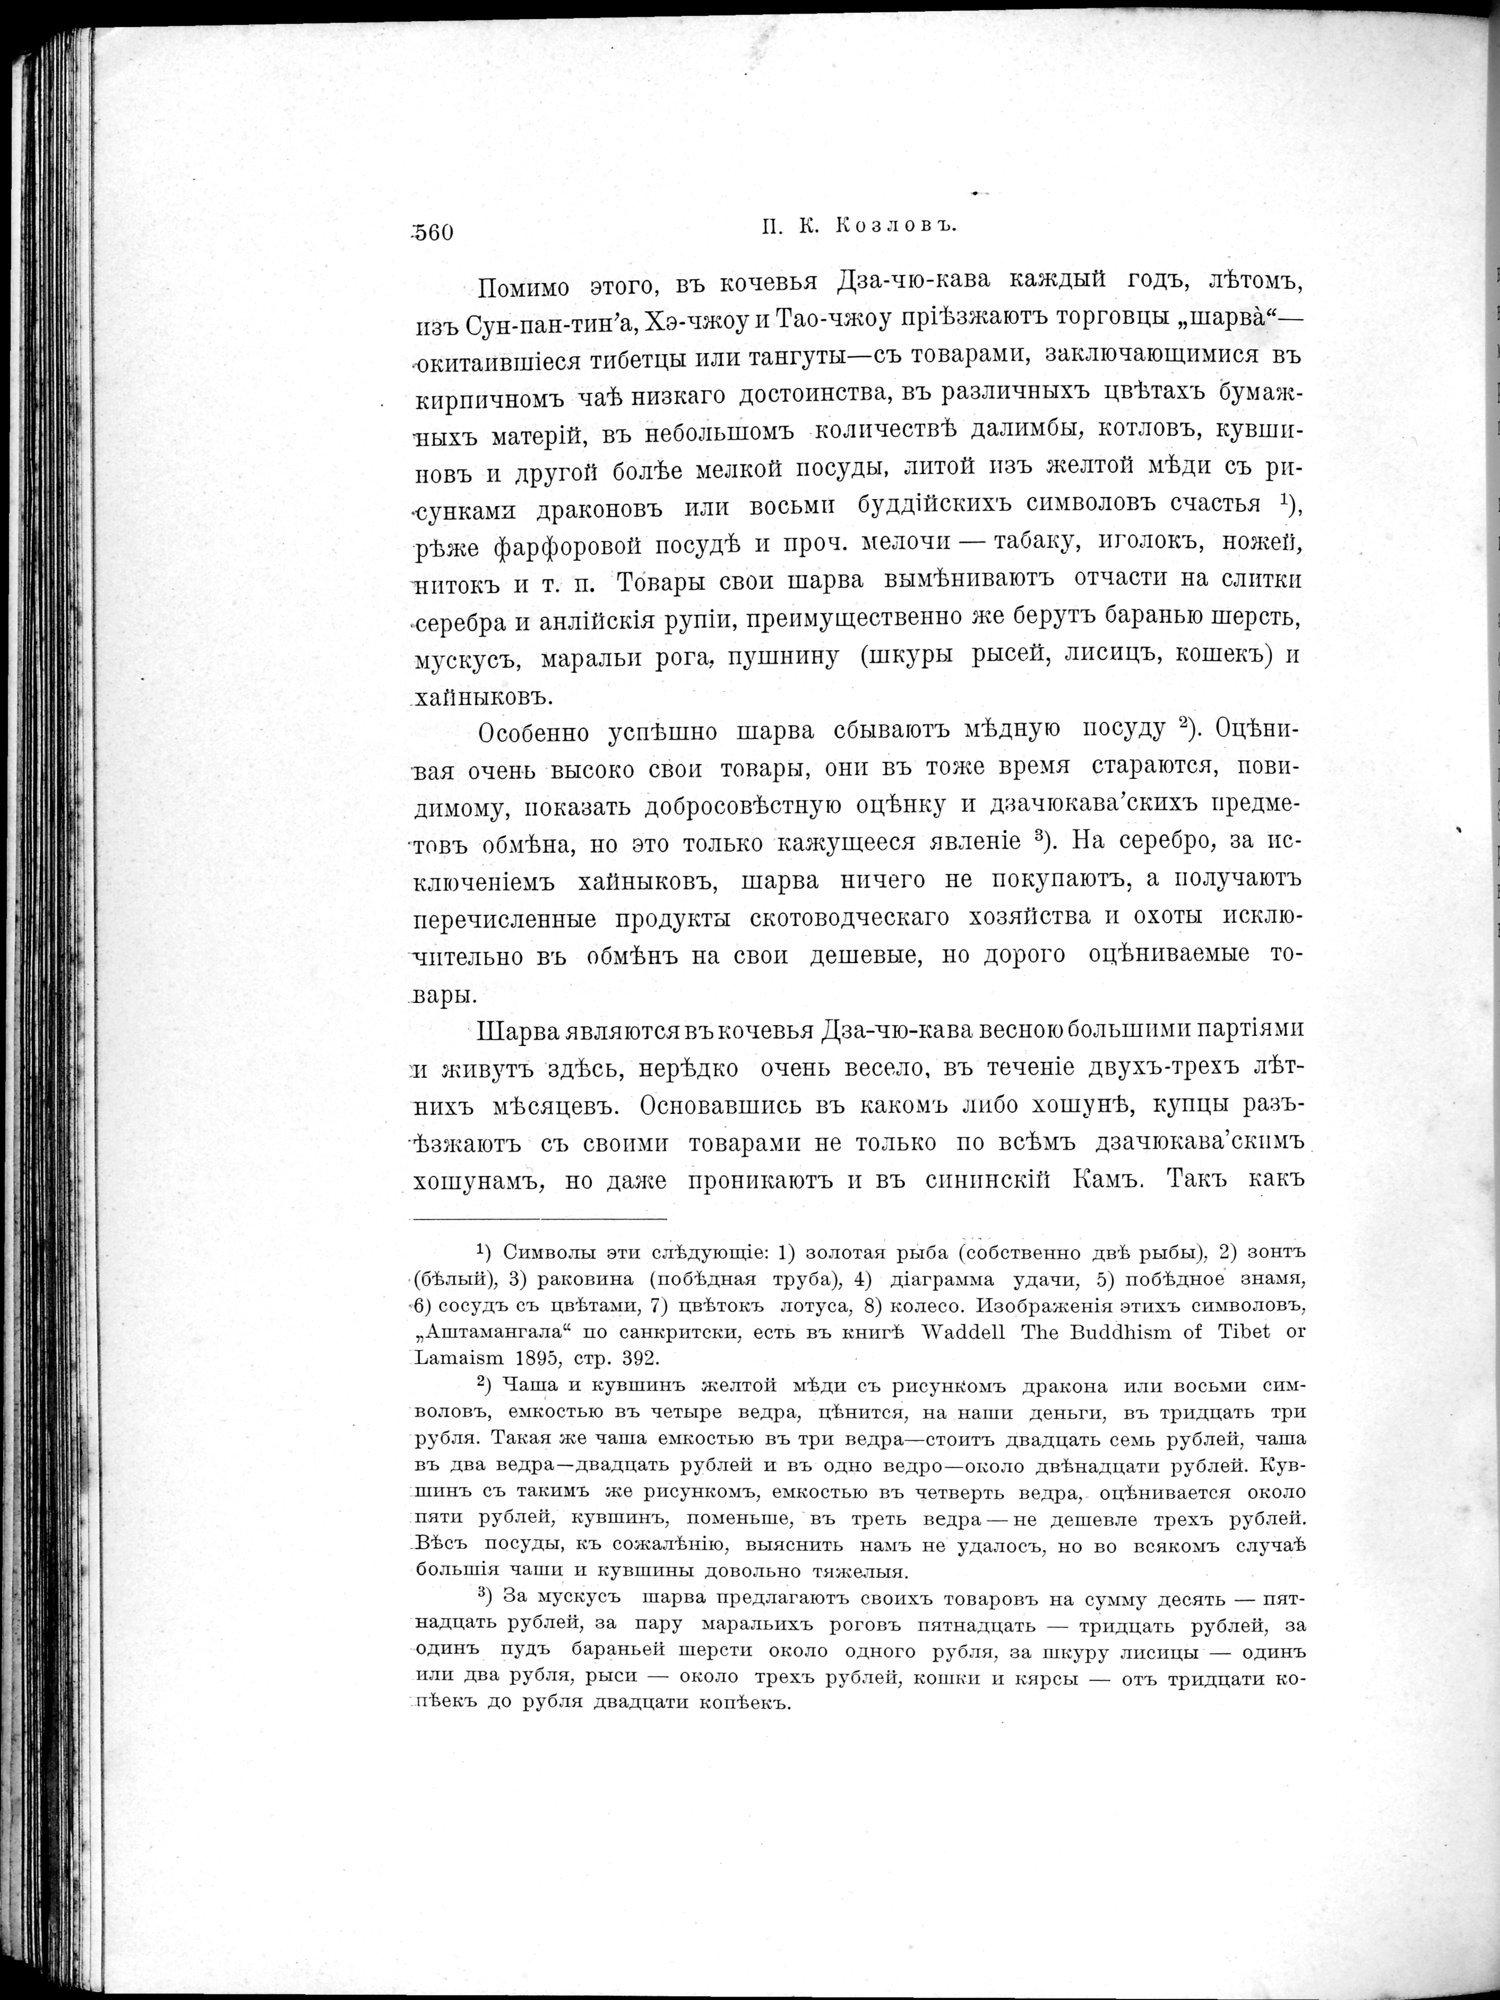 Mongoliia i Kam : vol.2 / Page 384 (Grayscale High Resolution Image)